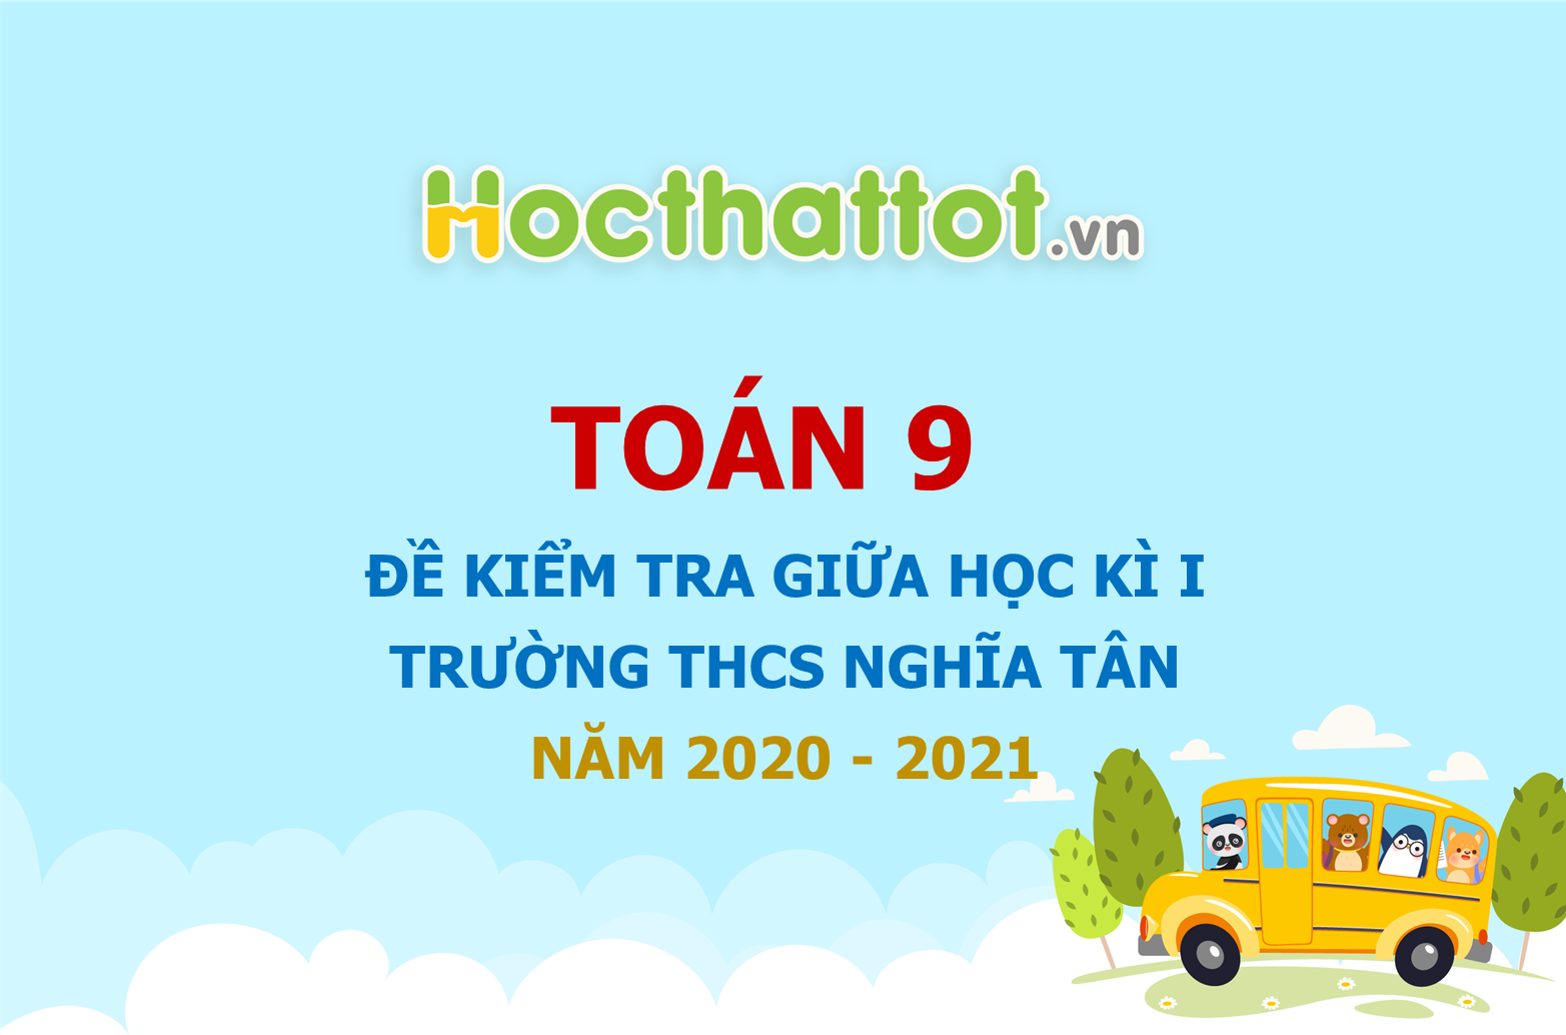 de-kiem-tra-giua-hoc-ki-1-lop9-truong-THCS-Nghia-Tan-nam-2020.jpg